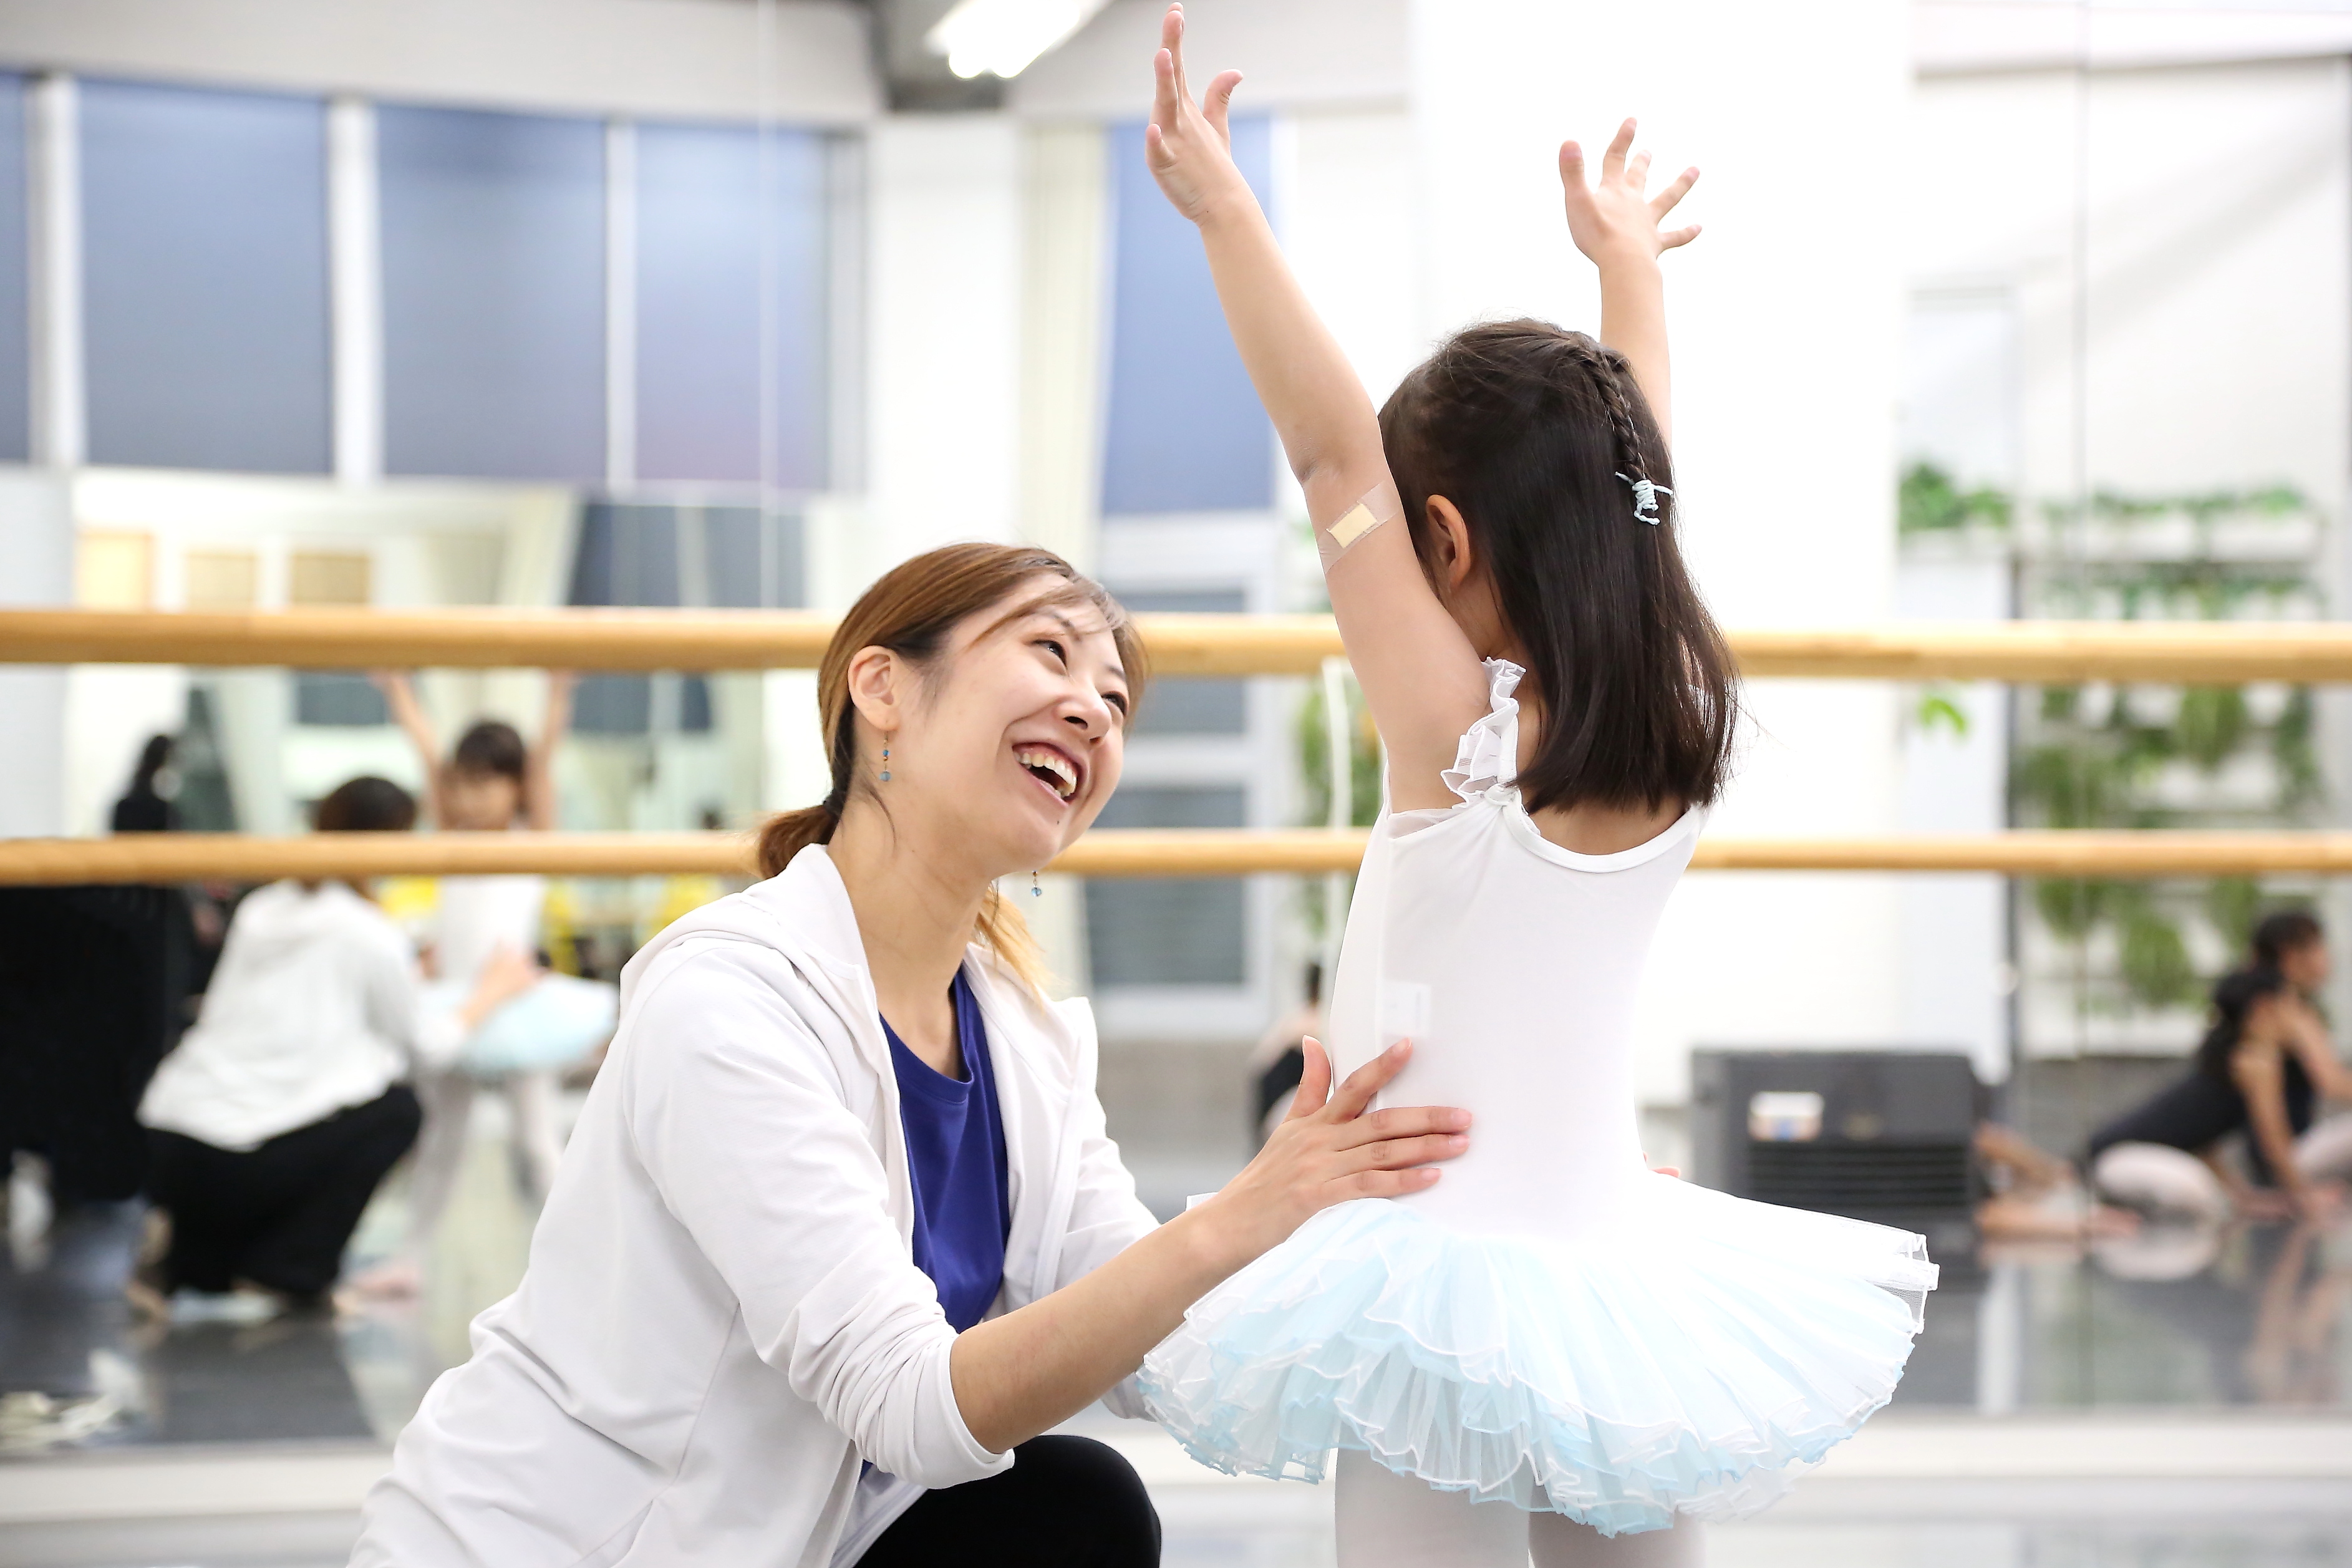 AIR BALLET STUDIO　旧和田朝子舞踊研究所